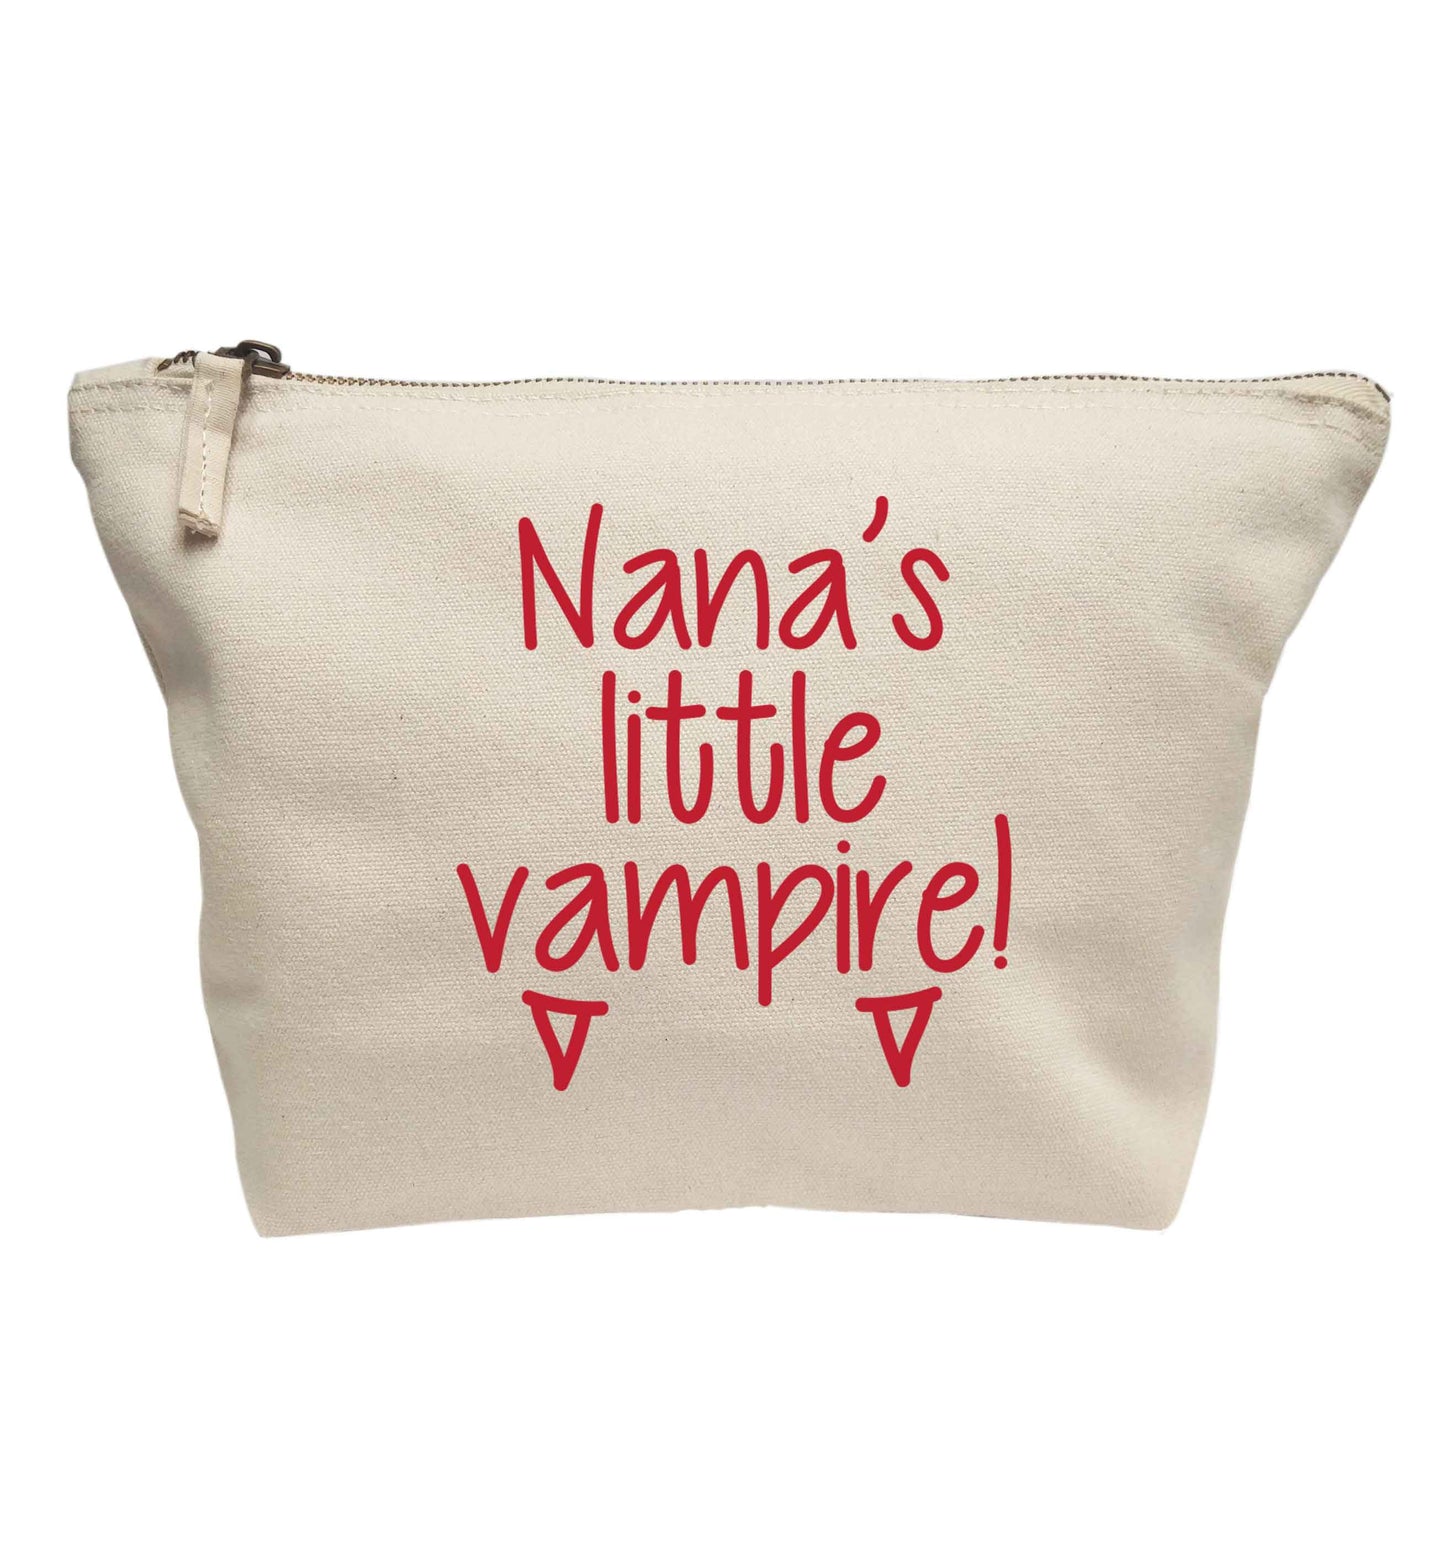 Nana's little vampire | Makeup / wash bag